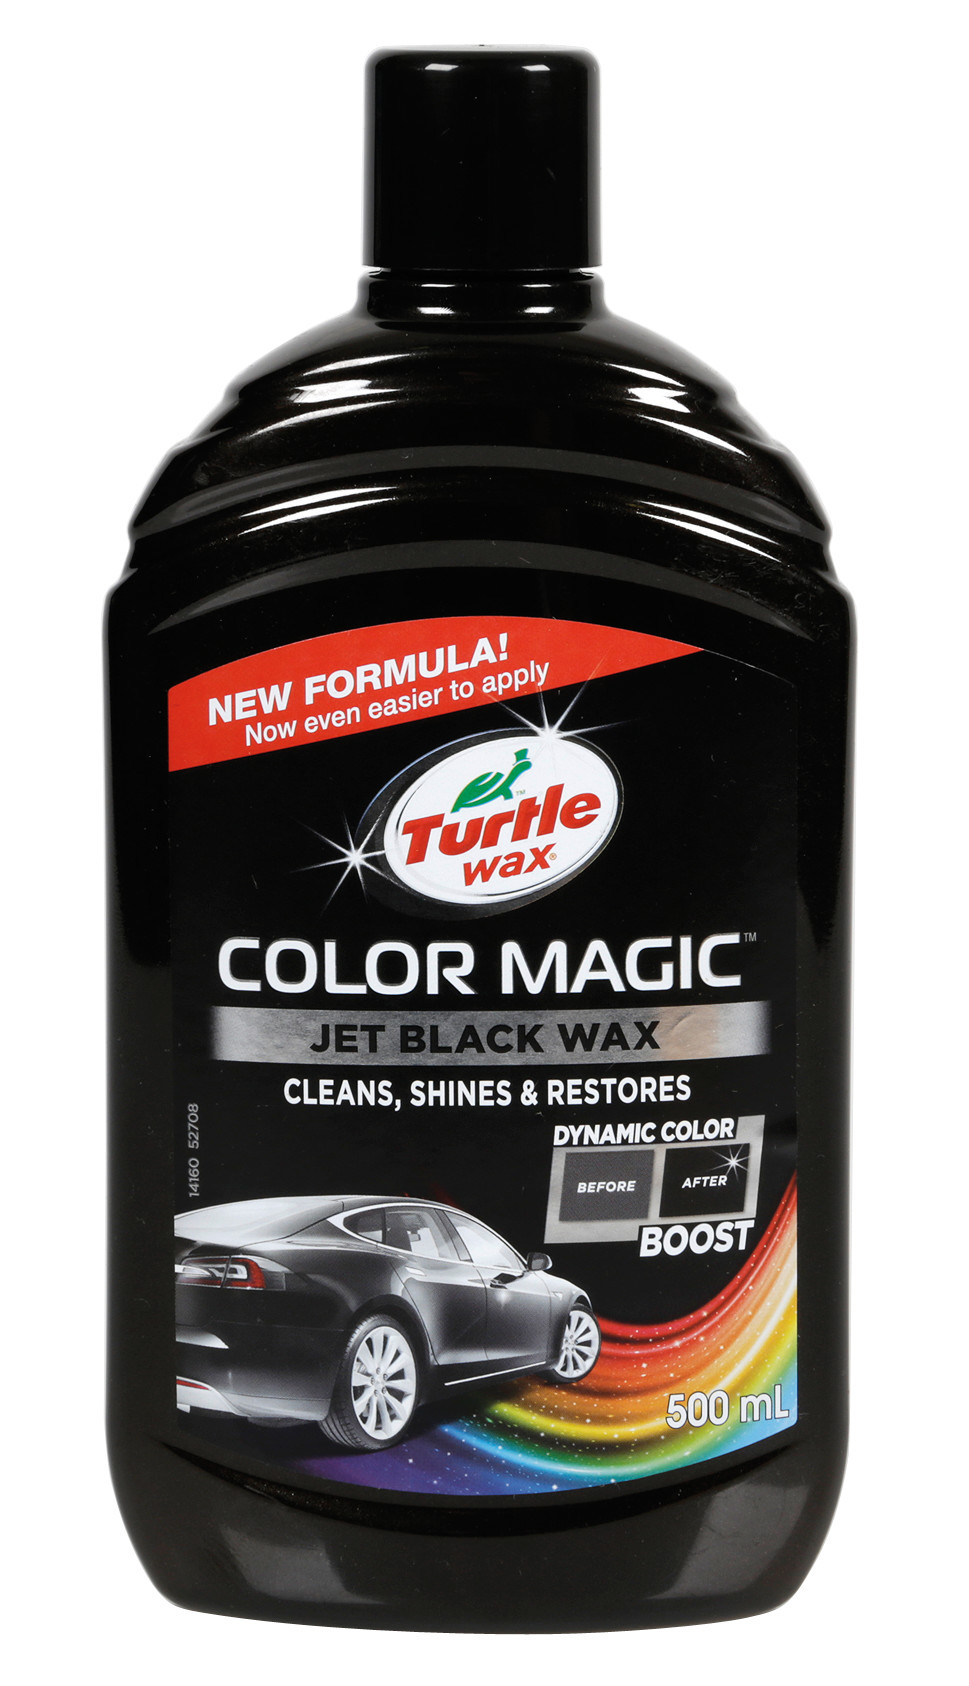 Turtle wax Color Magic car polishing paste 500ml - Black thumb